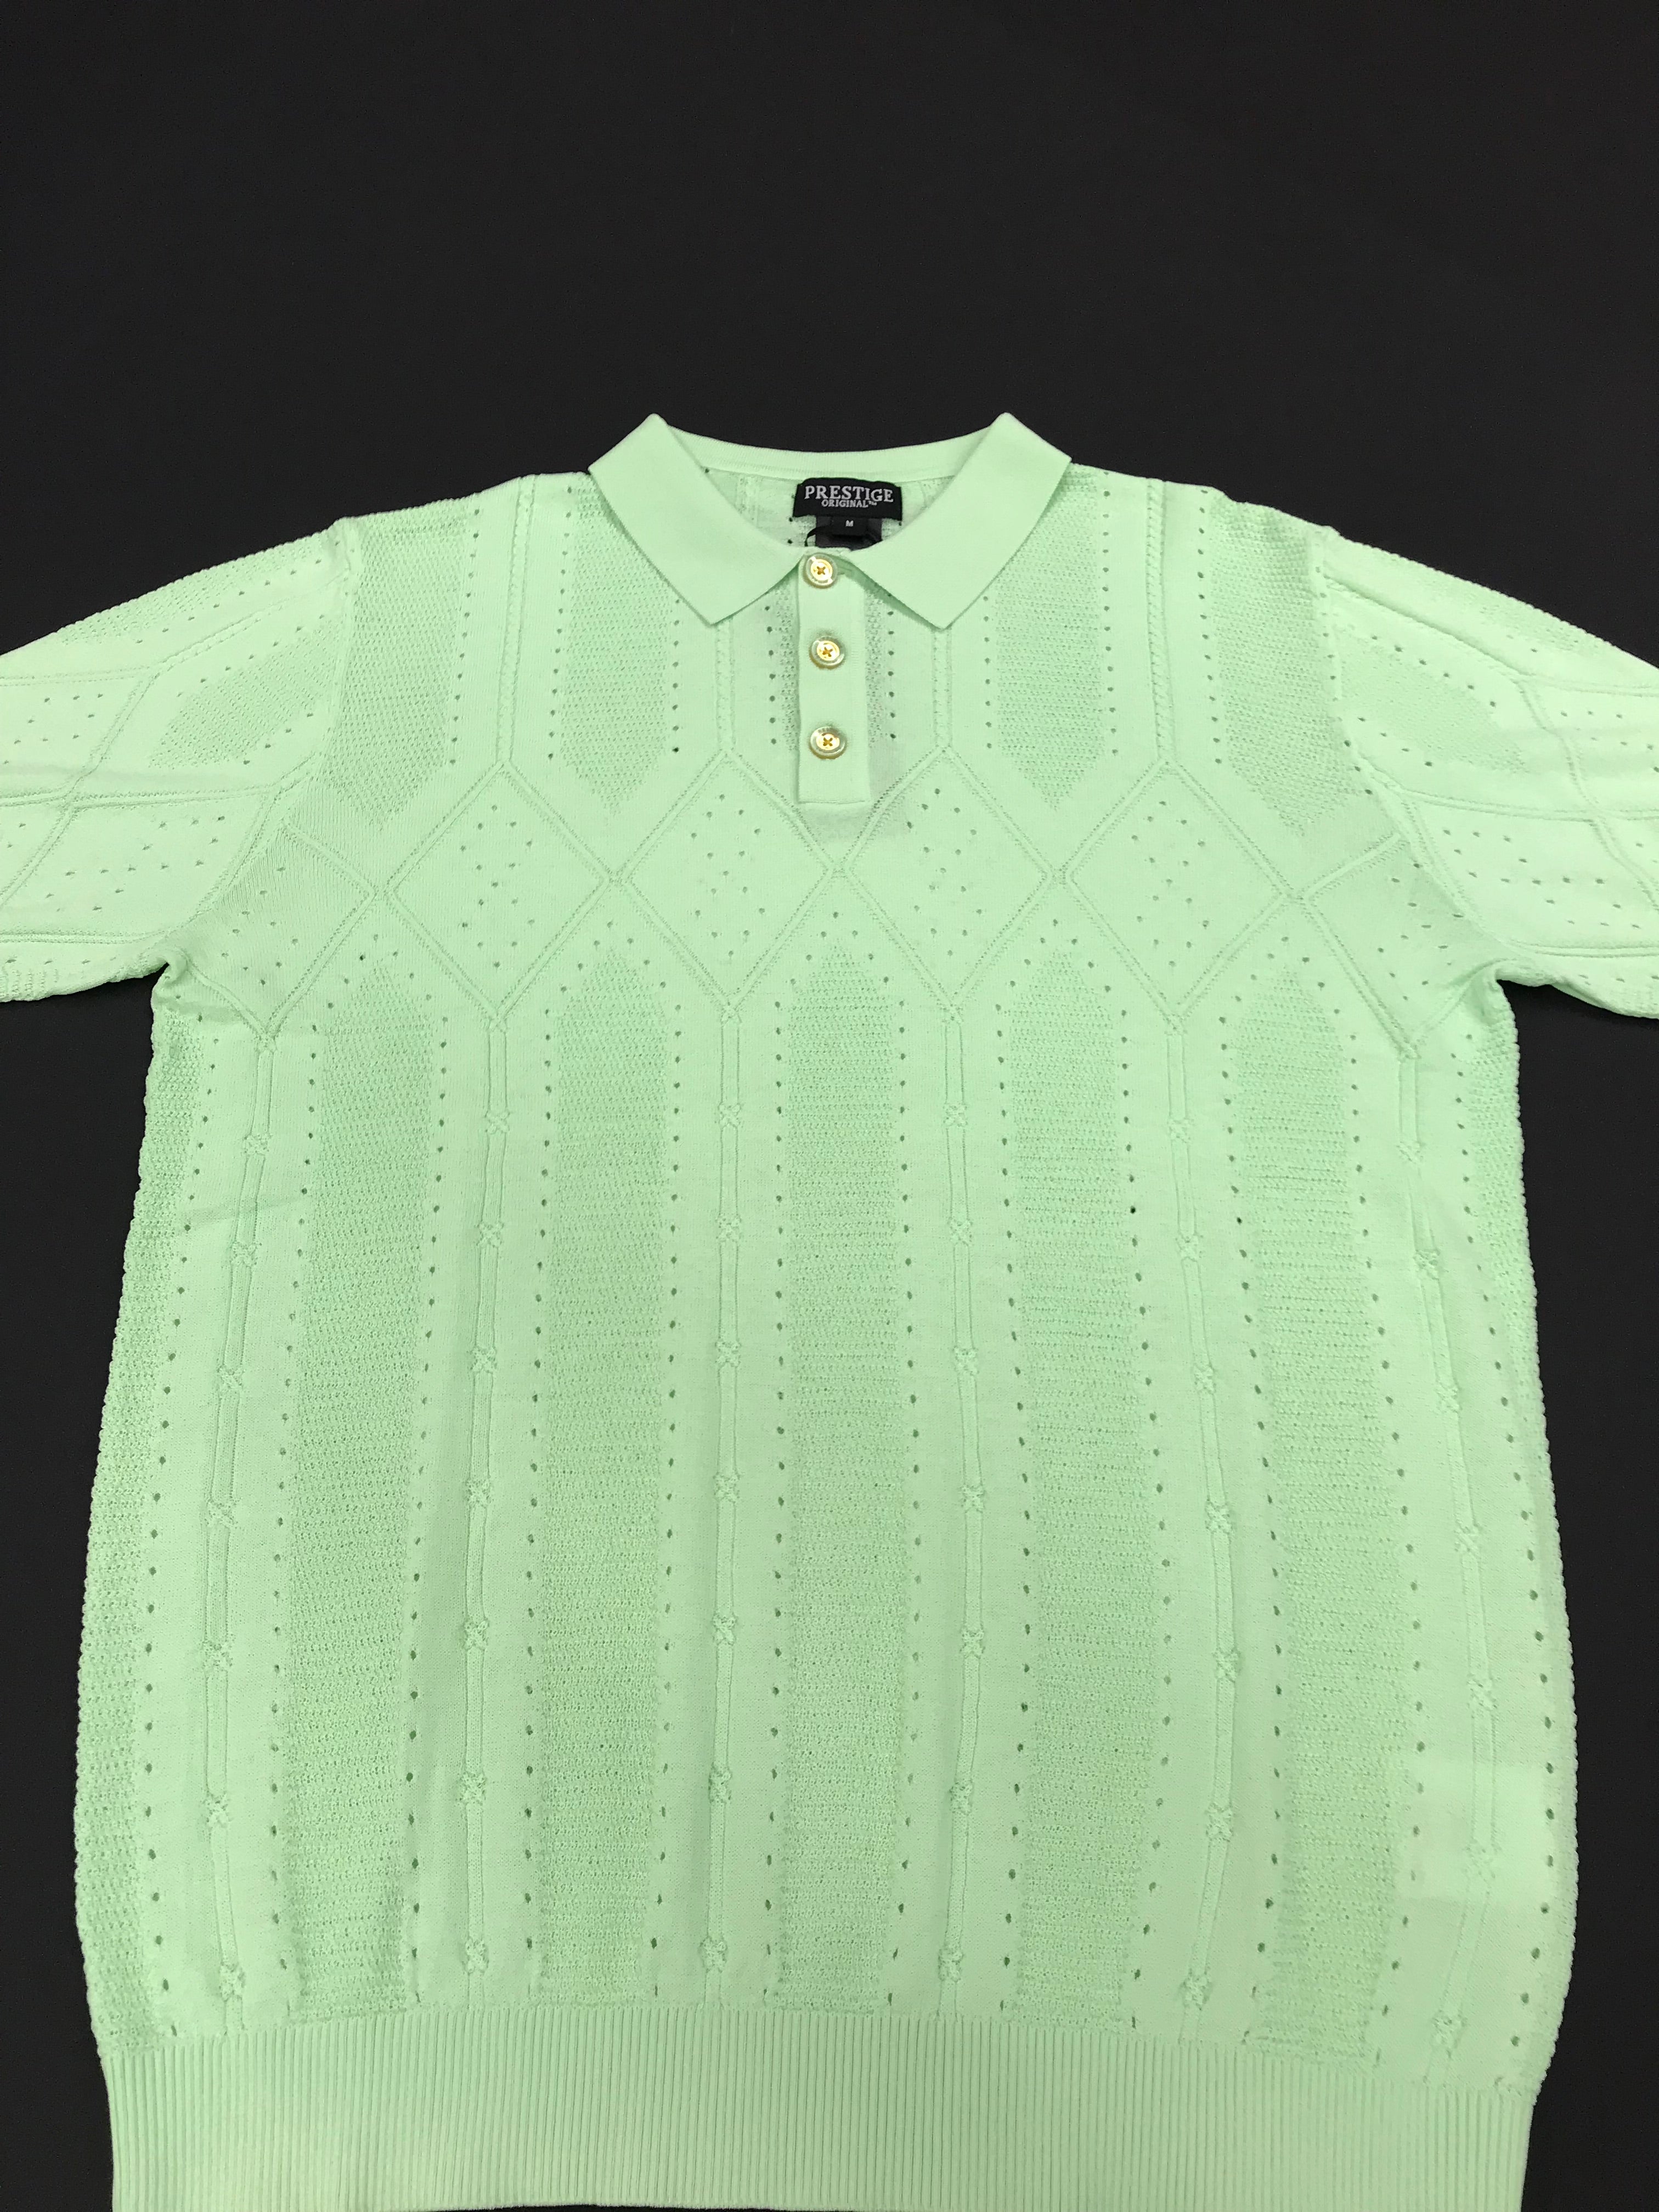 Prestige Lime Green Short Sleeve Shirt